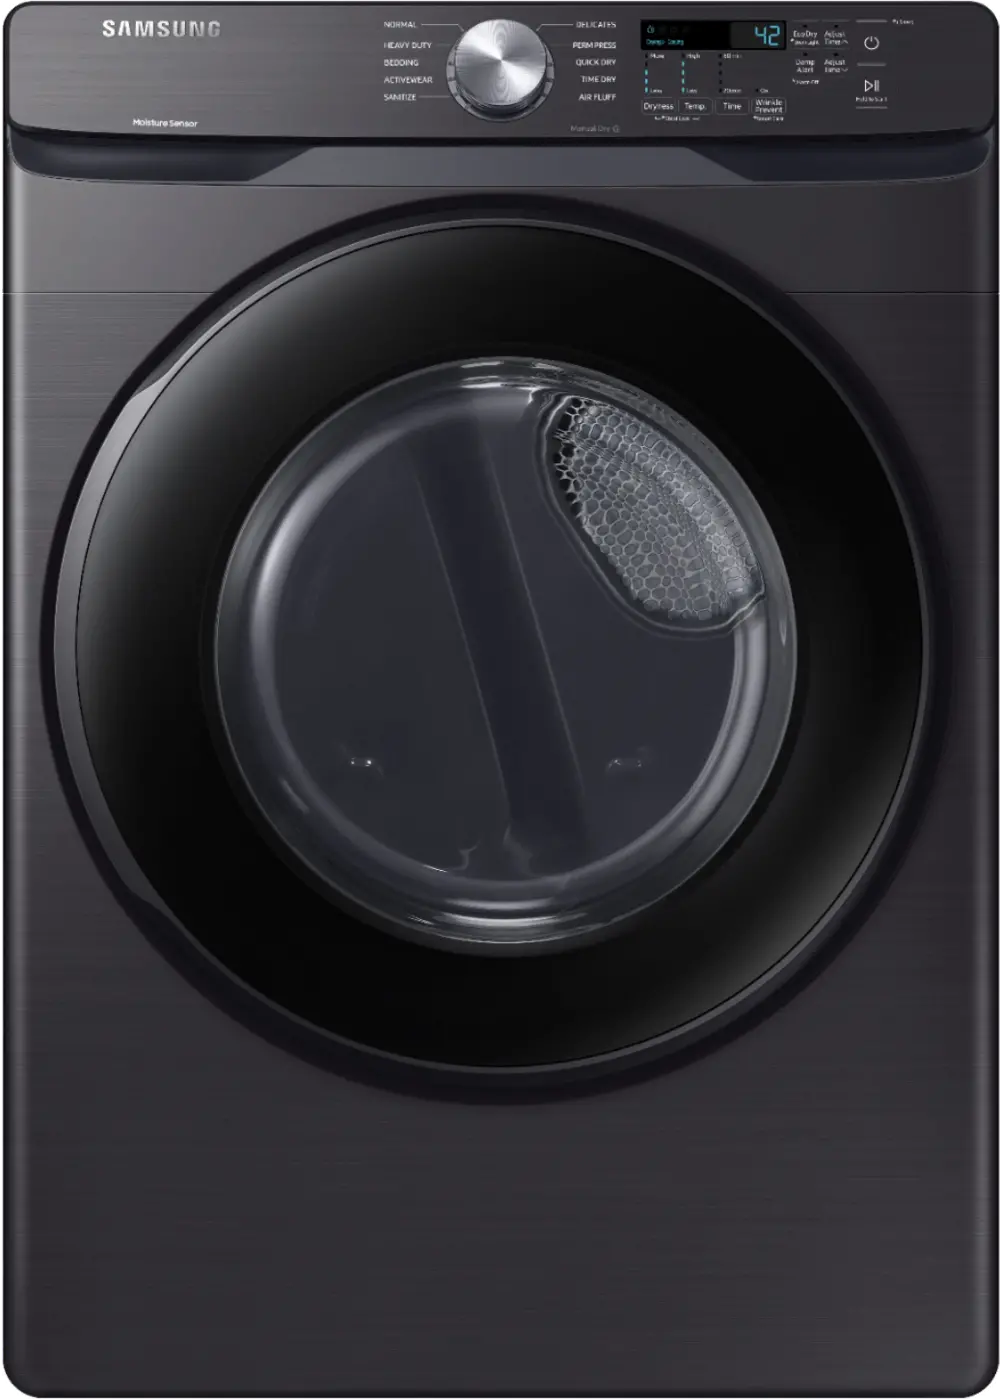 DVE45T6000V Samsung Electric Dryer with Sensor Dry - Black Stainless Steel 7.5 cu. ft.-1